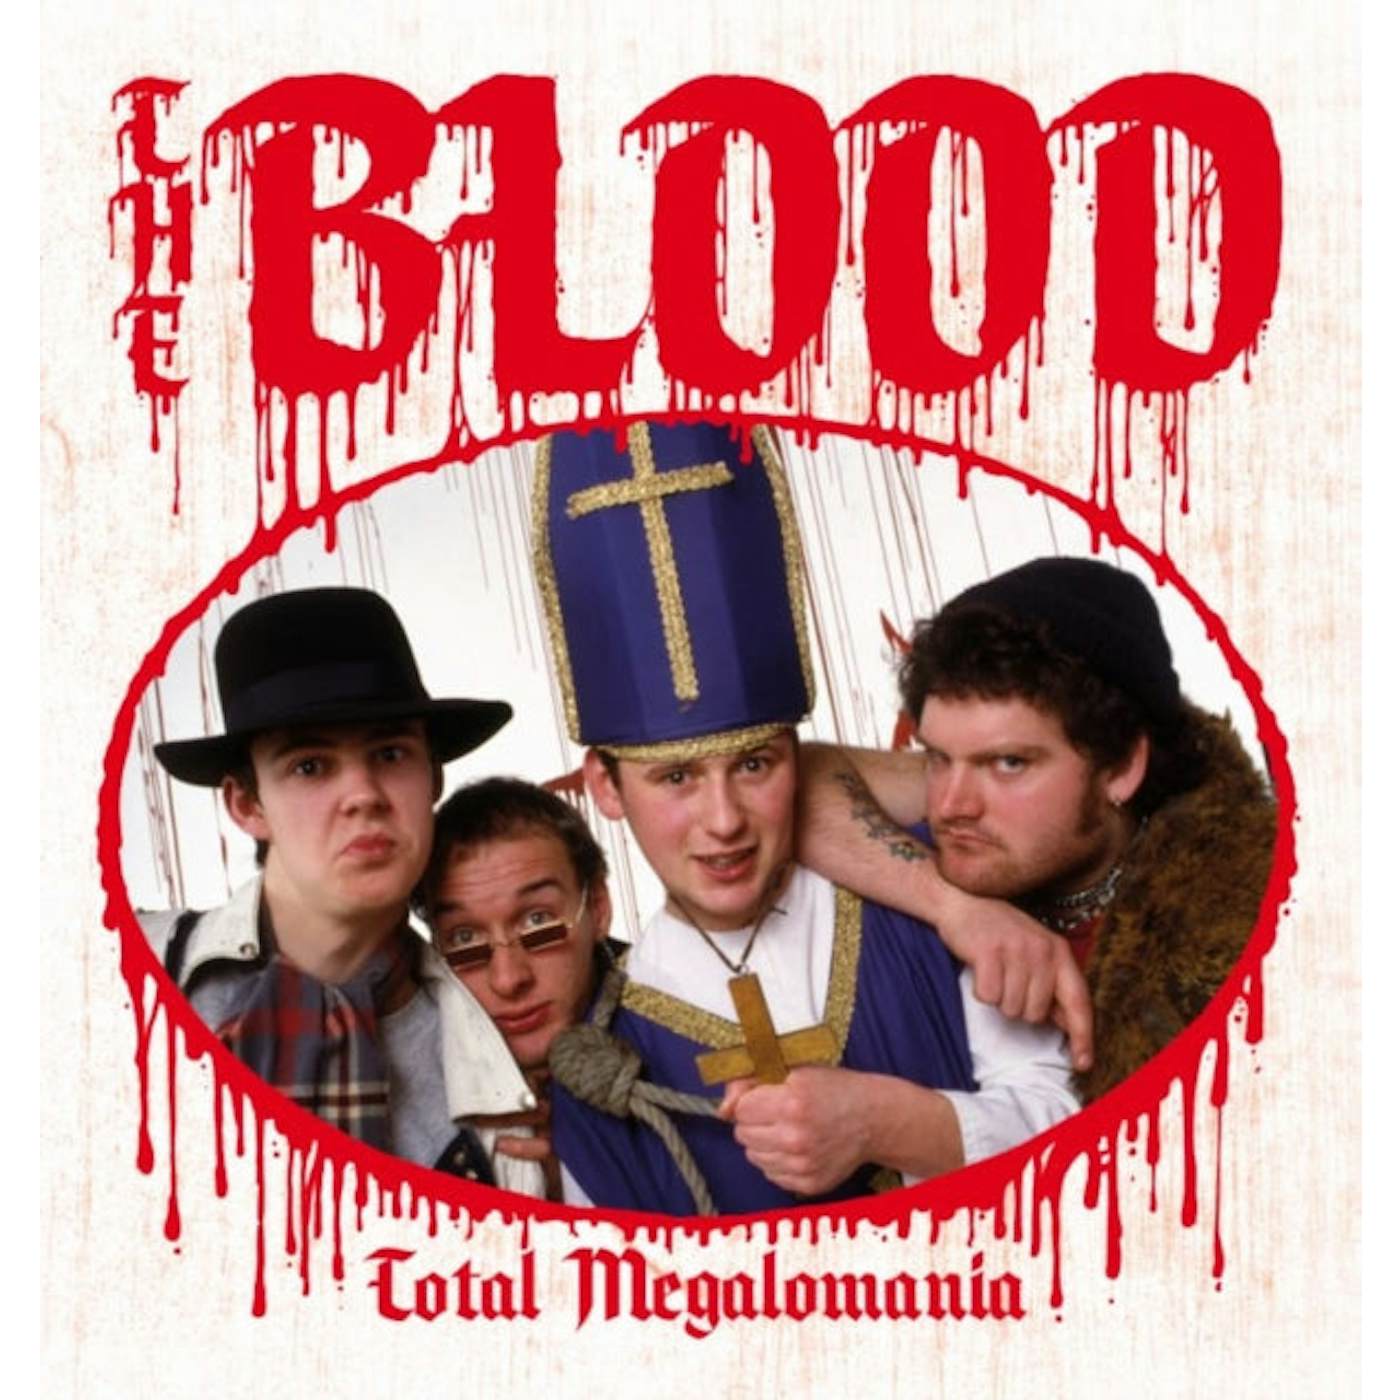 Blood LP Vinyl Record - Total Megalomania